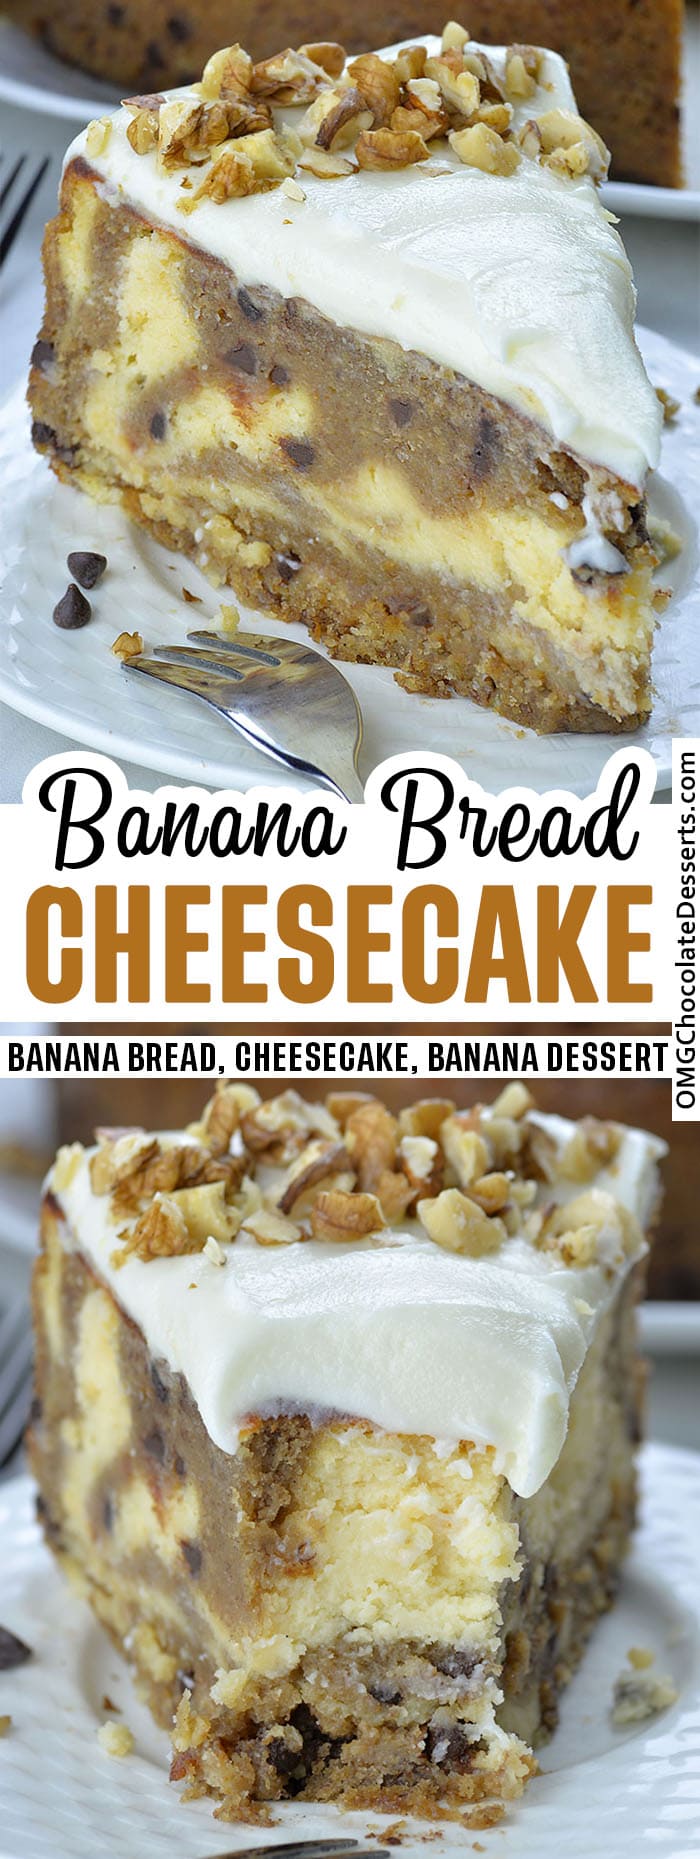 Banana Bread Cheesecake